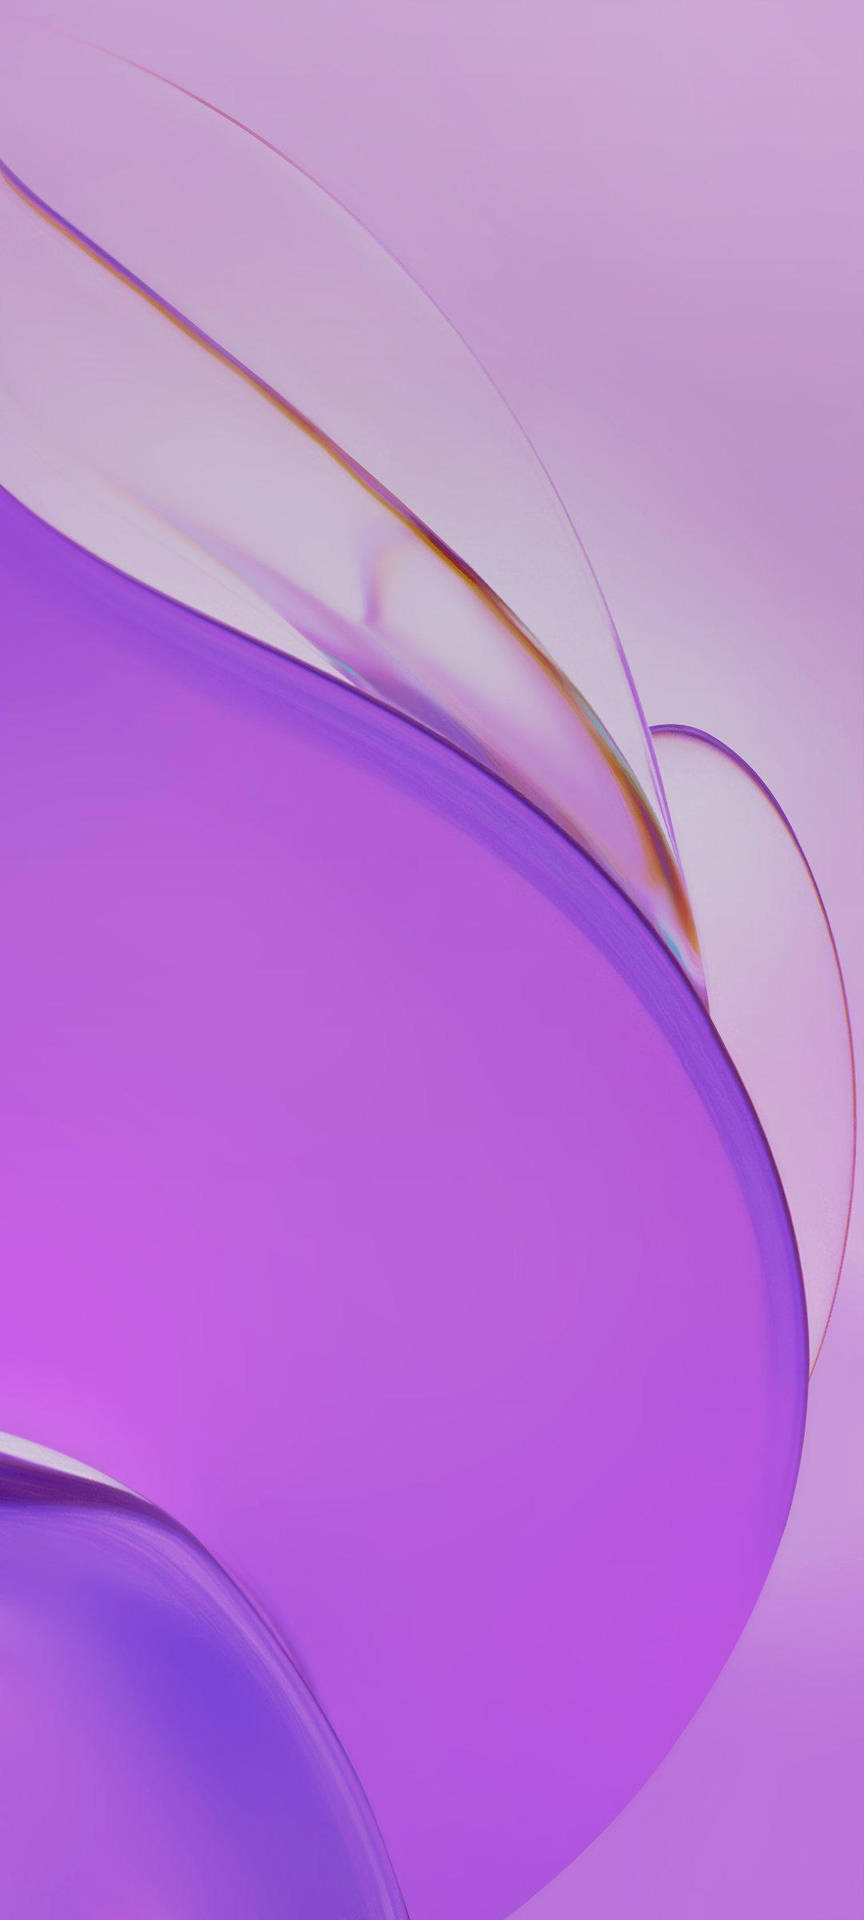 Explore the Sleek Sophistication - The Vivo V20 in Striking Purple Wallpaper